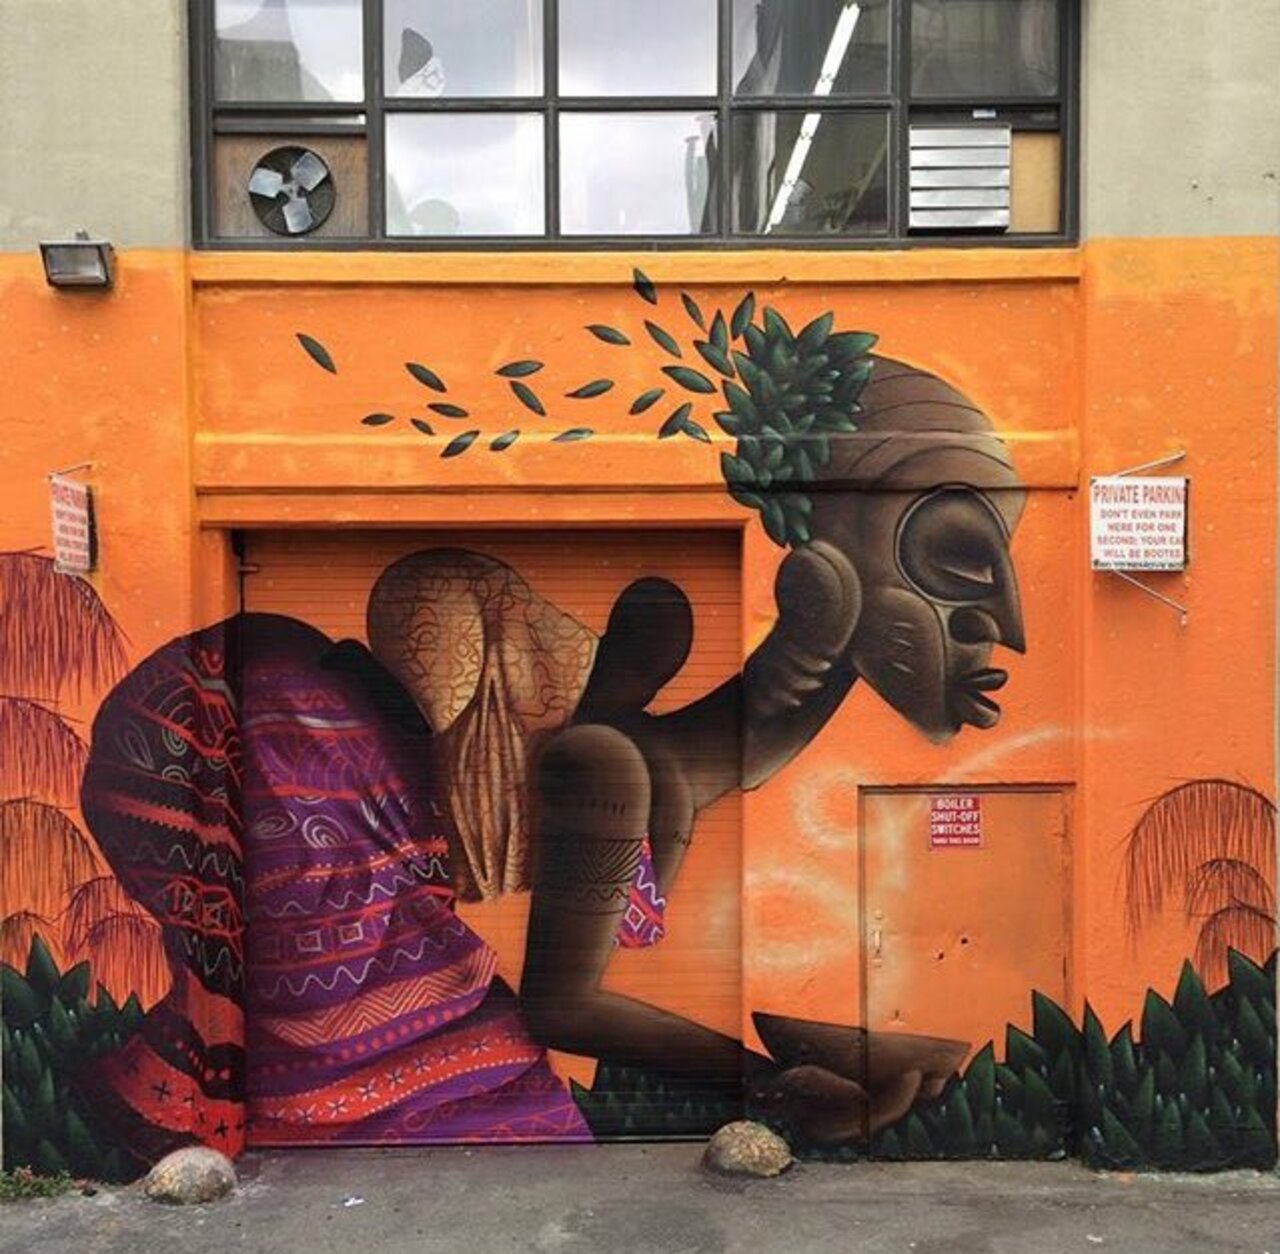 New Street Art by Alexandre Keto in NYC 

#art #graffiti #mural #streetart https://t.co/97CyRGQms2